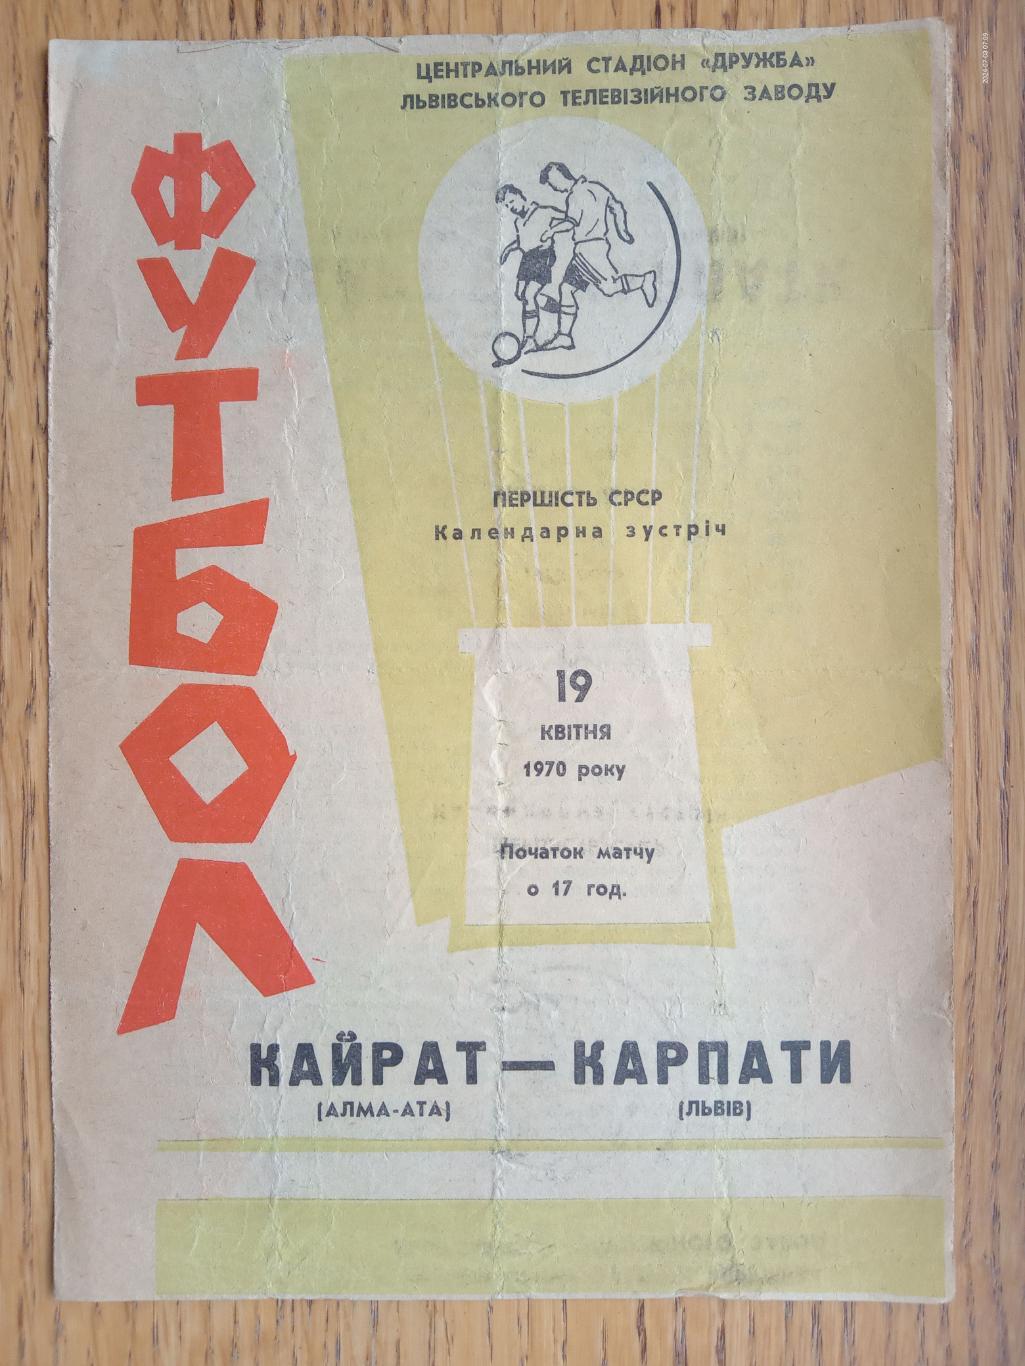 Кайрат Алма-Ата - Карпати Львів. 19.04.1970.м.